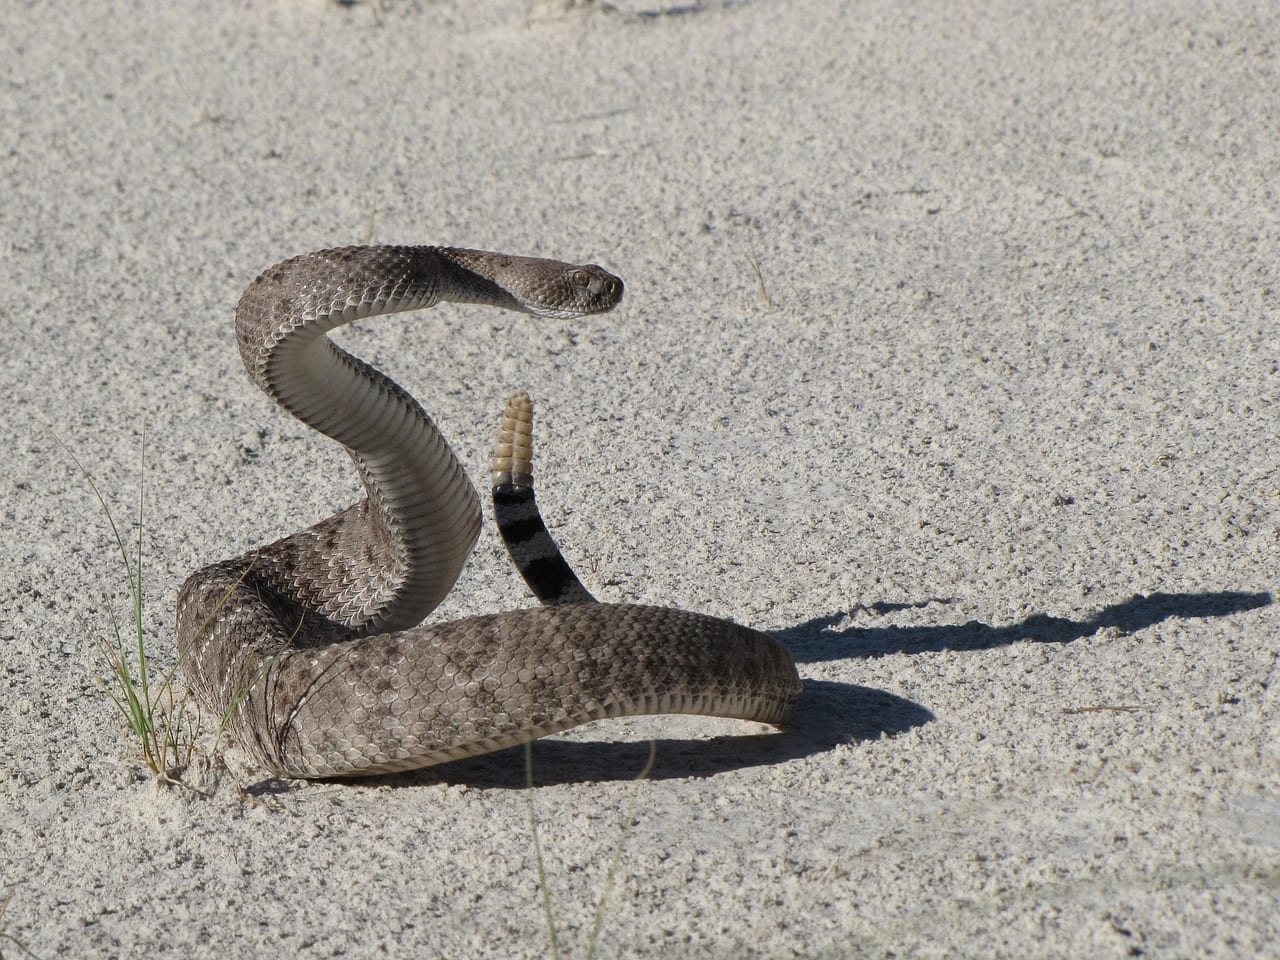 https://pixabay.com/photos/western-diamondback-rattlesnake-viper-1929358/